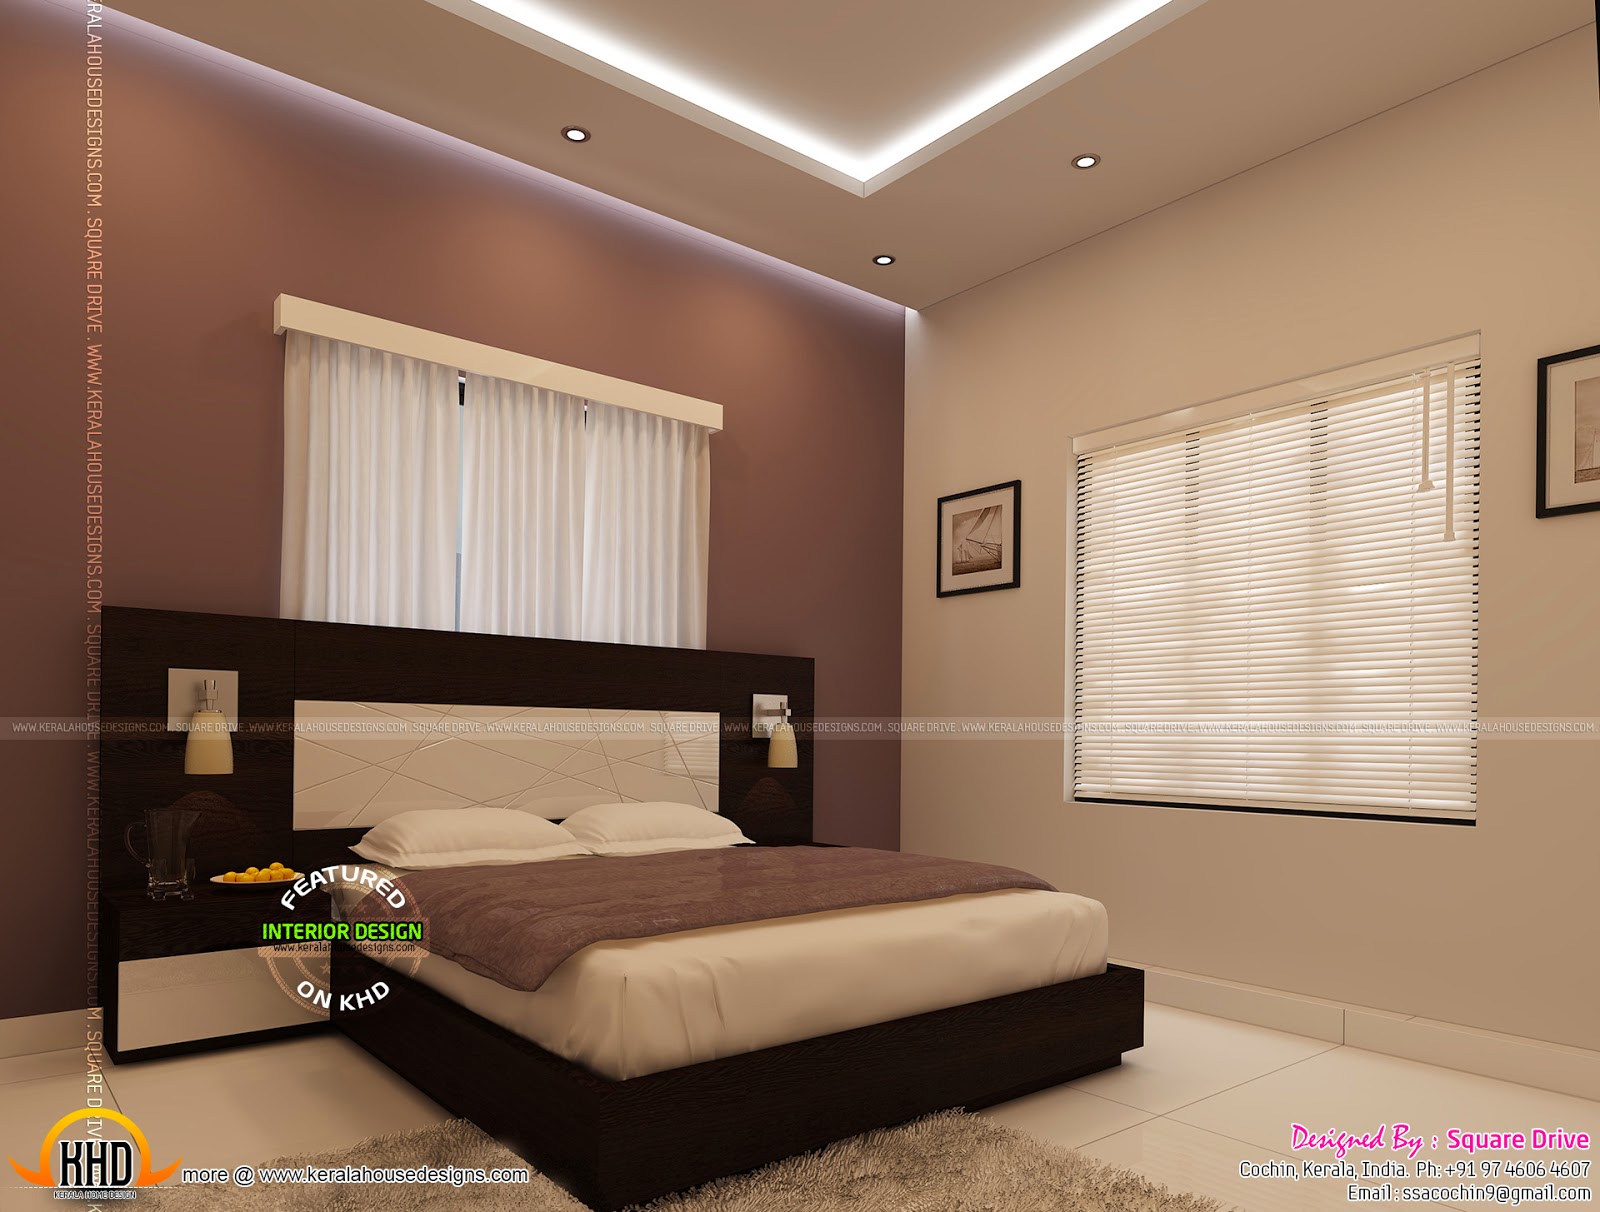 Bedroom interior designs - Kerala home design and floor plans